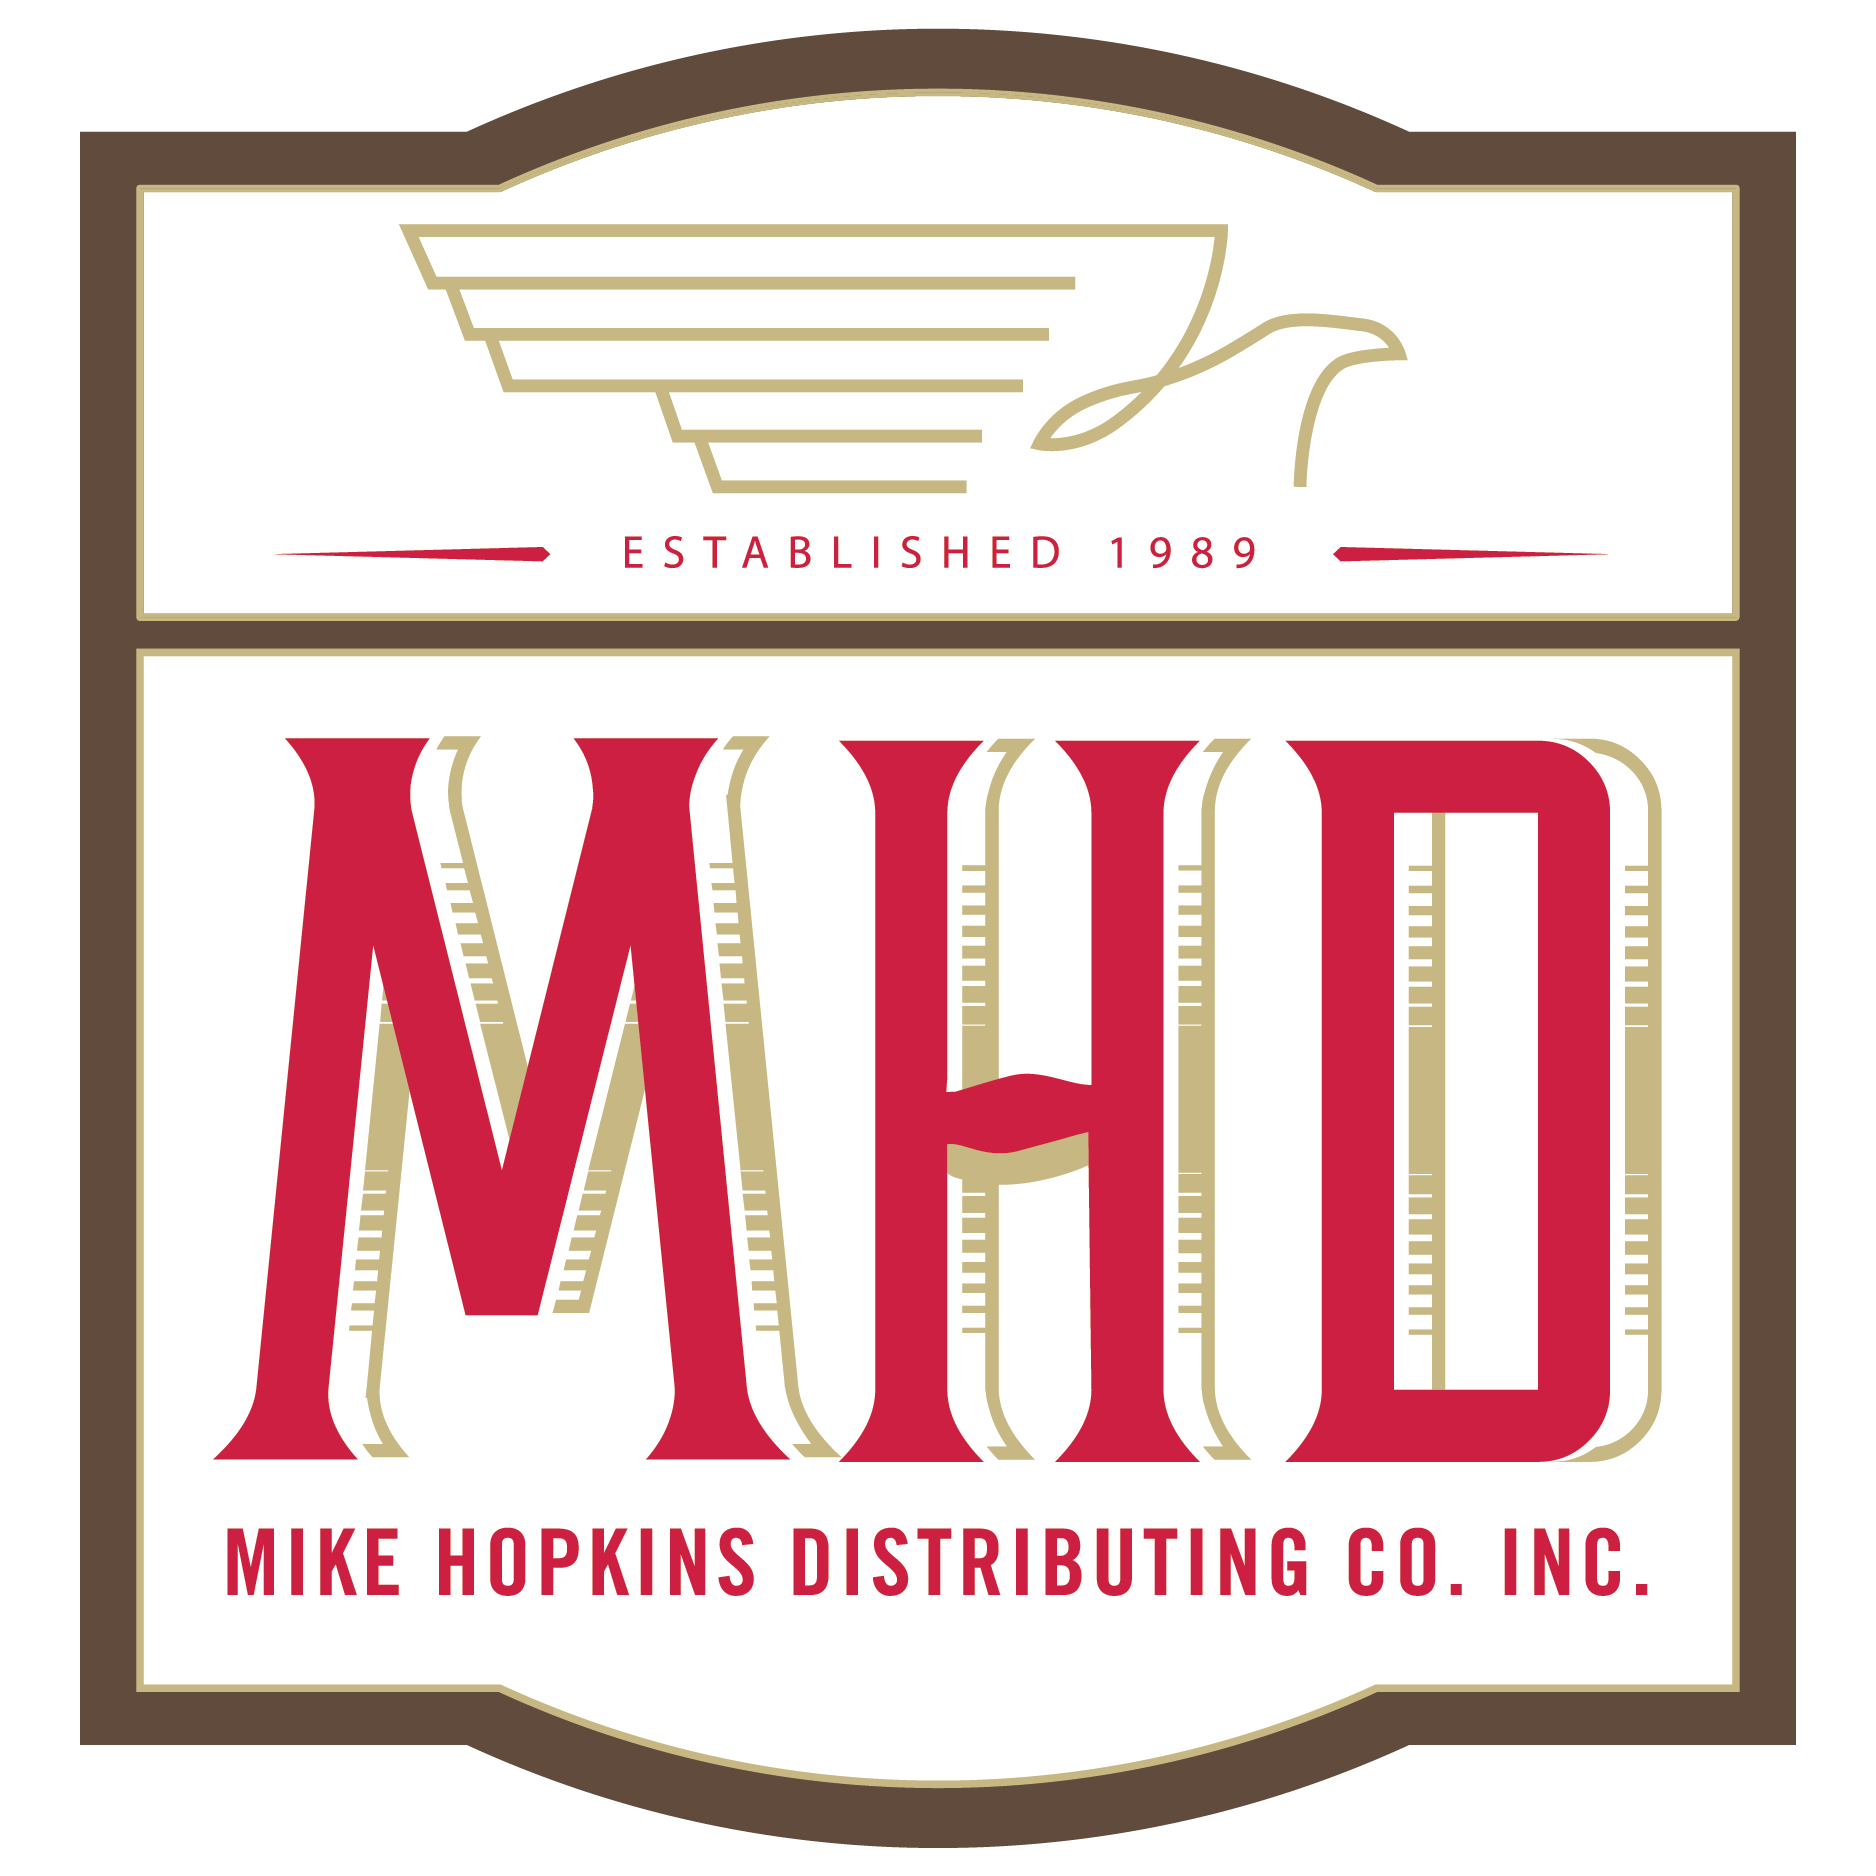 MHD - Mike Hopkins Distributing Co. Inc. logo